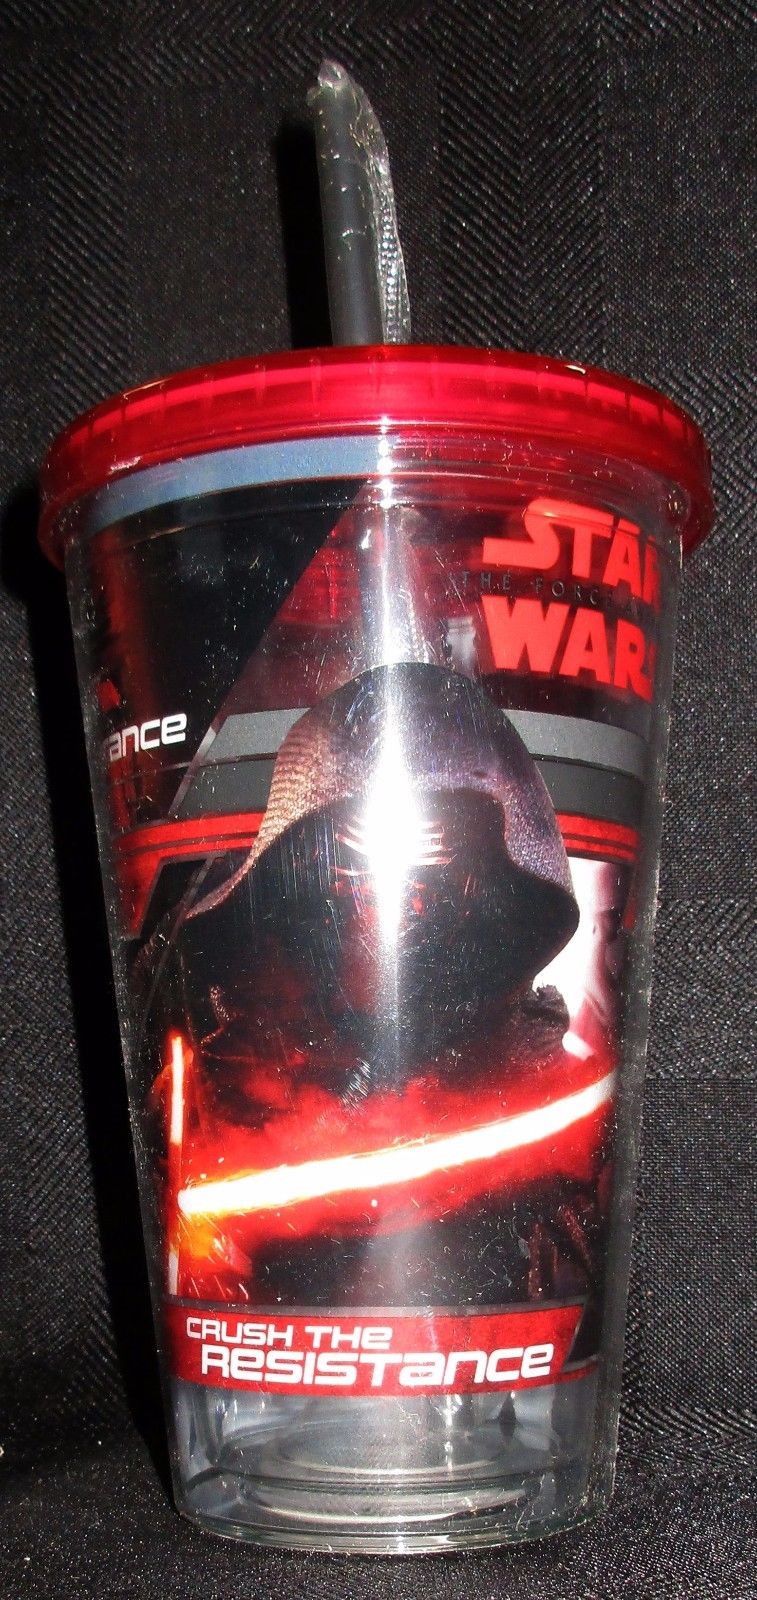 Star Wars Force Awakens 18 oz Acrylic Travel Cup